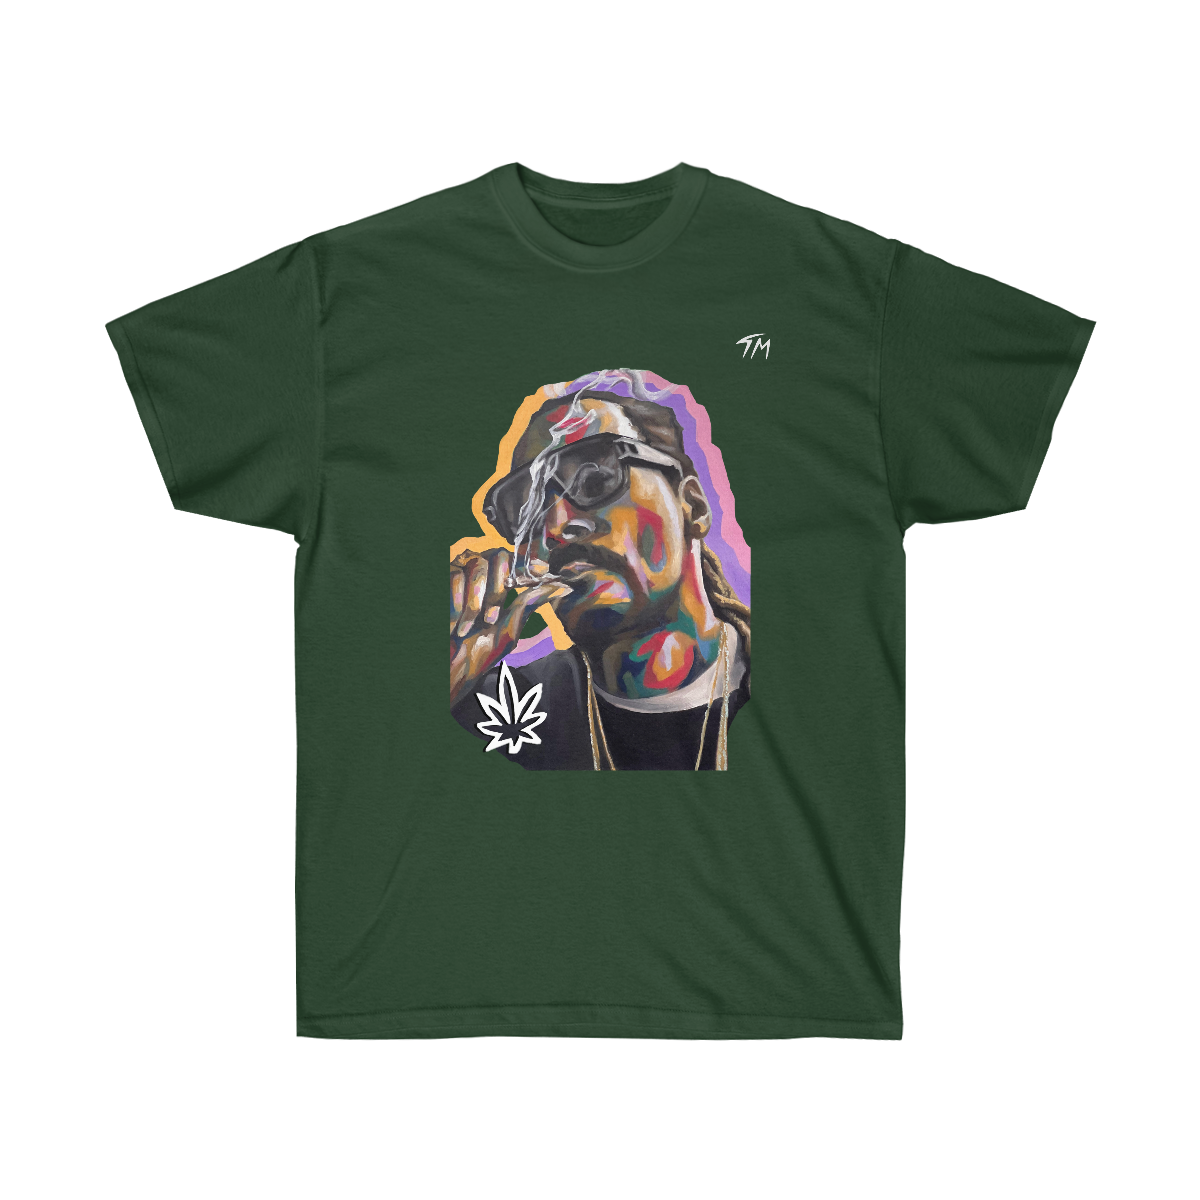 Snoop Dogg - T-Shirt - Tommy Manning Art